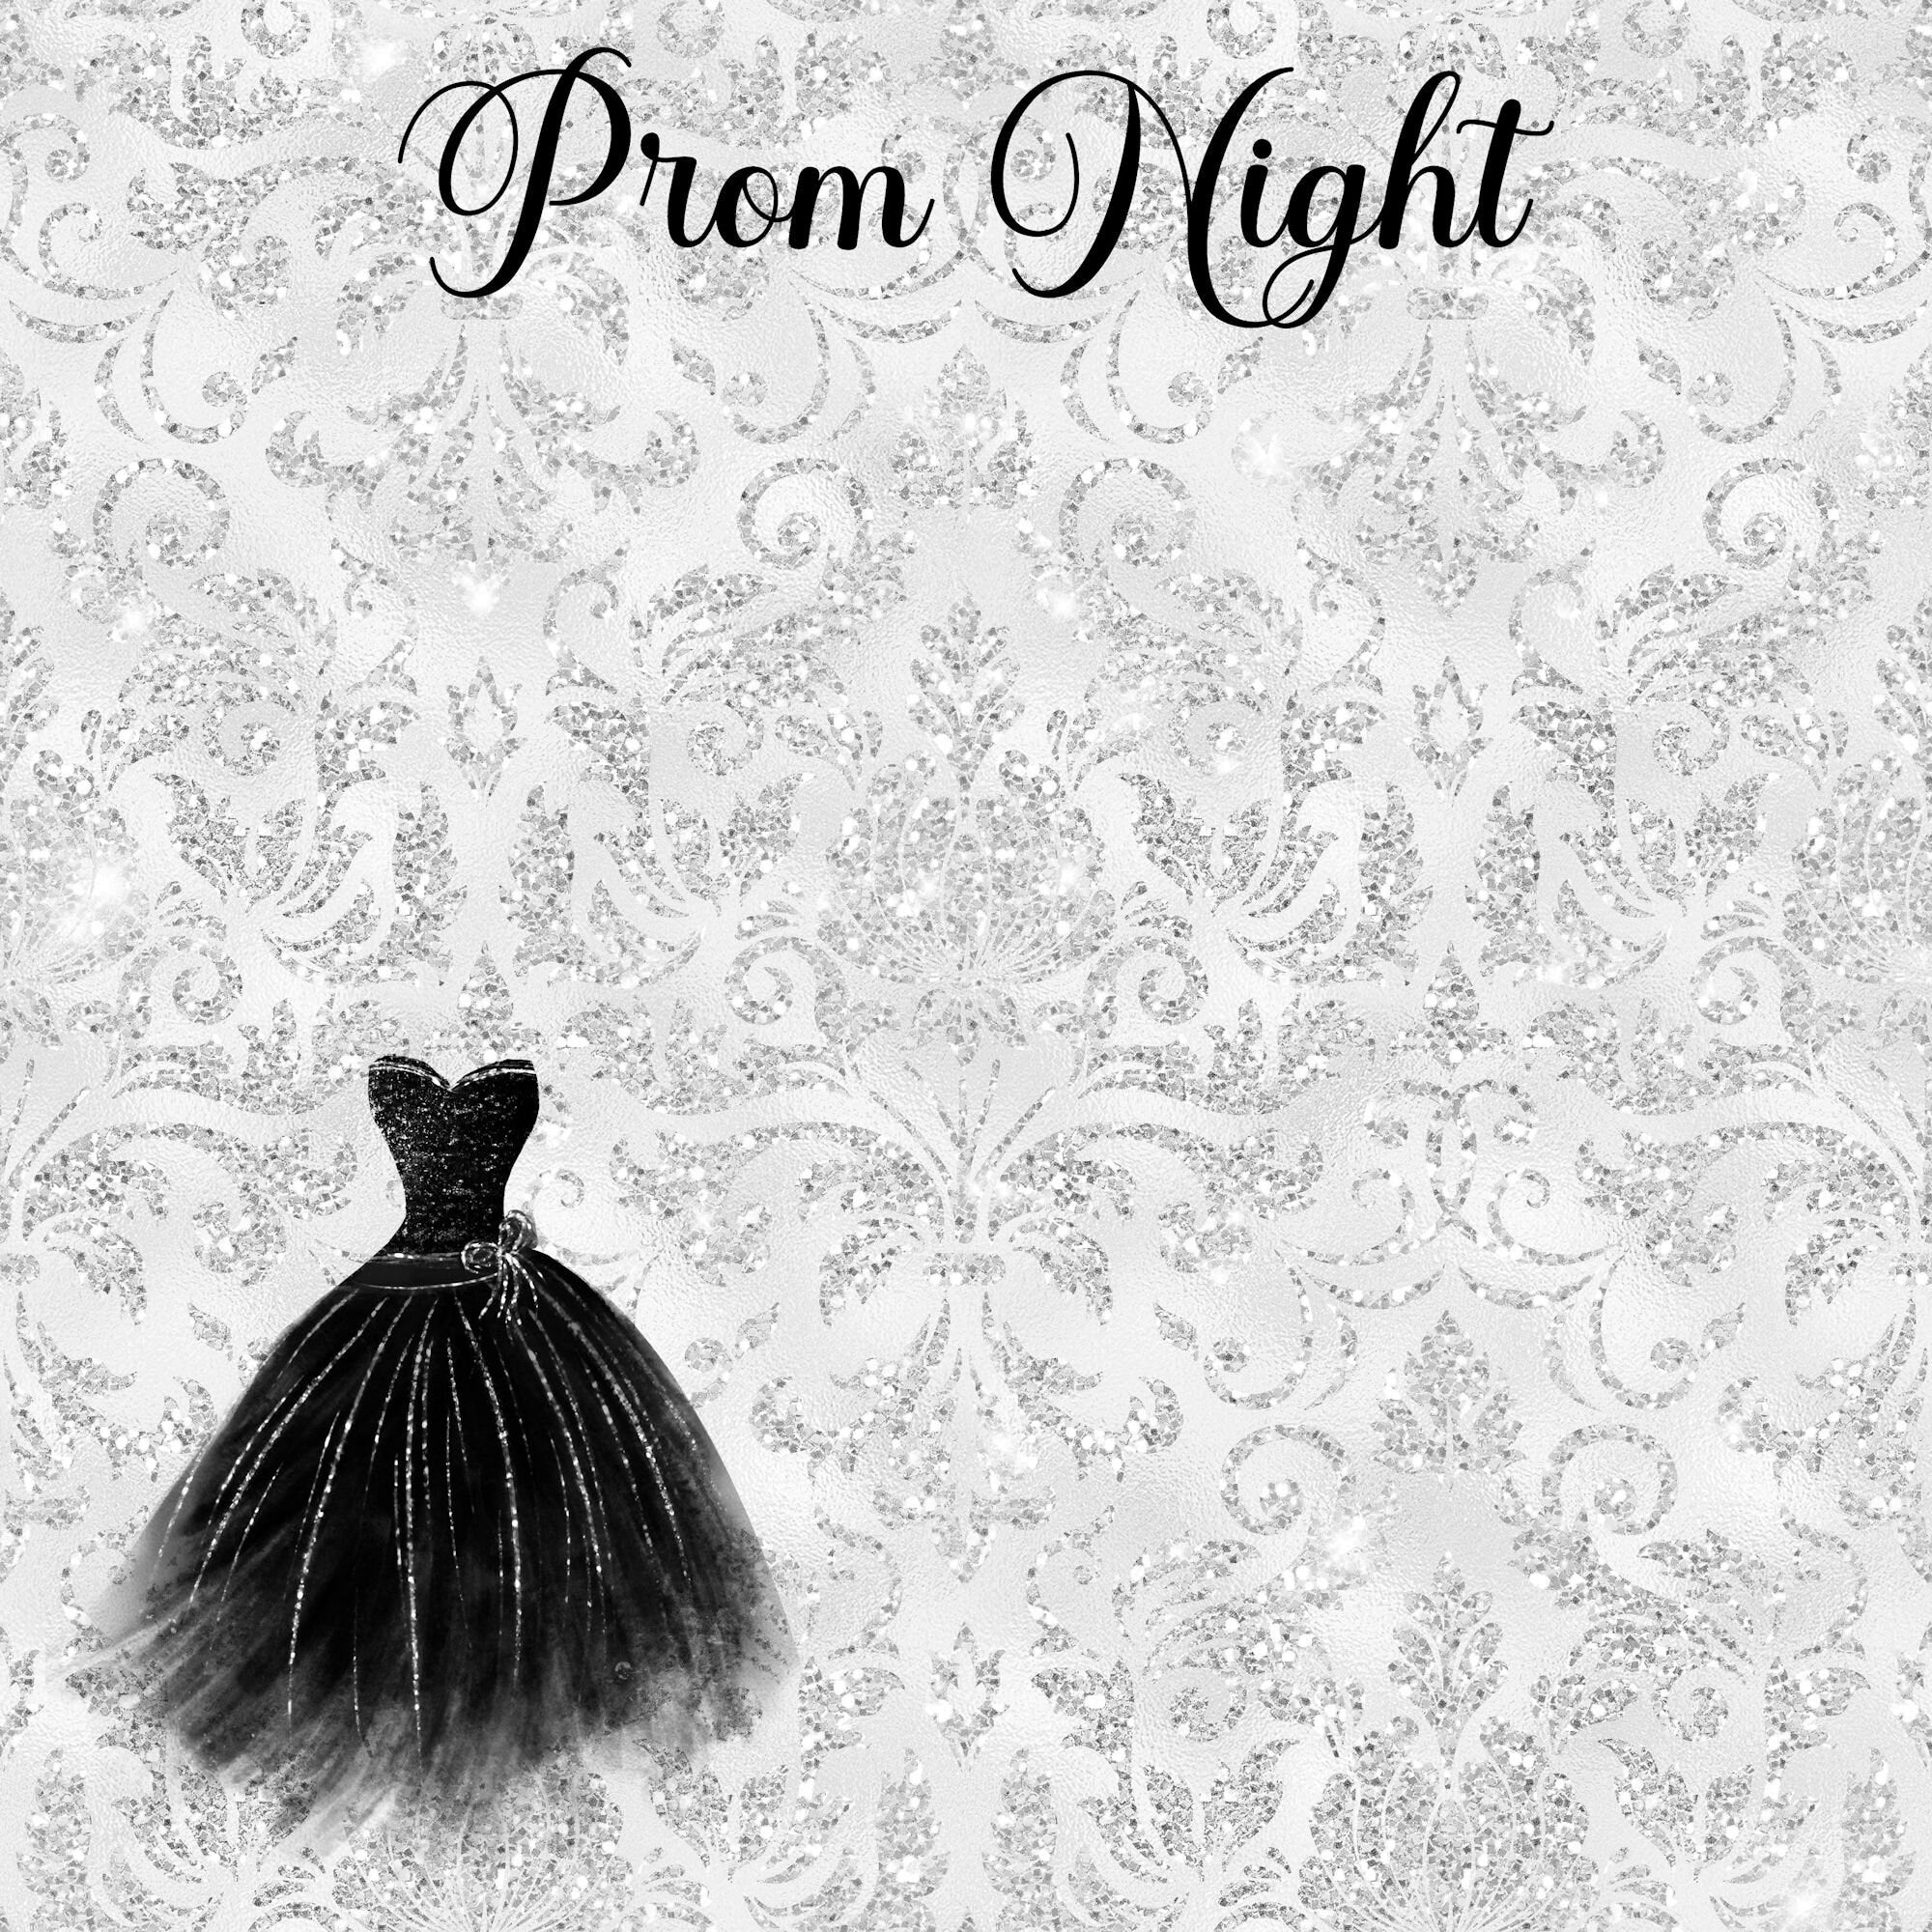 Prom Formal Night Elegant Scrapbook Paper & Embellishment Kit by SSC Designs